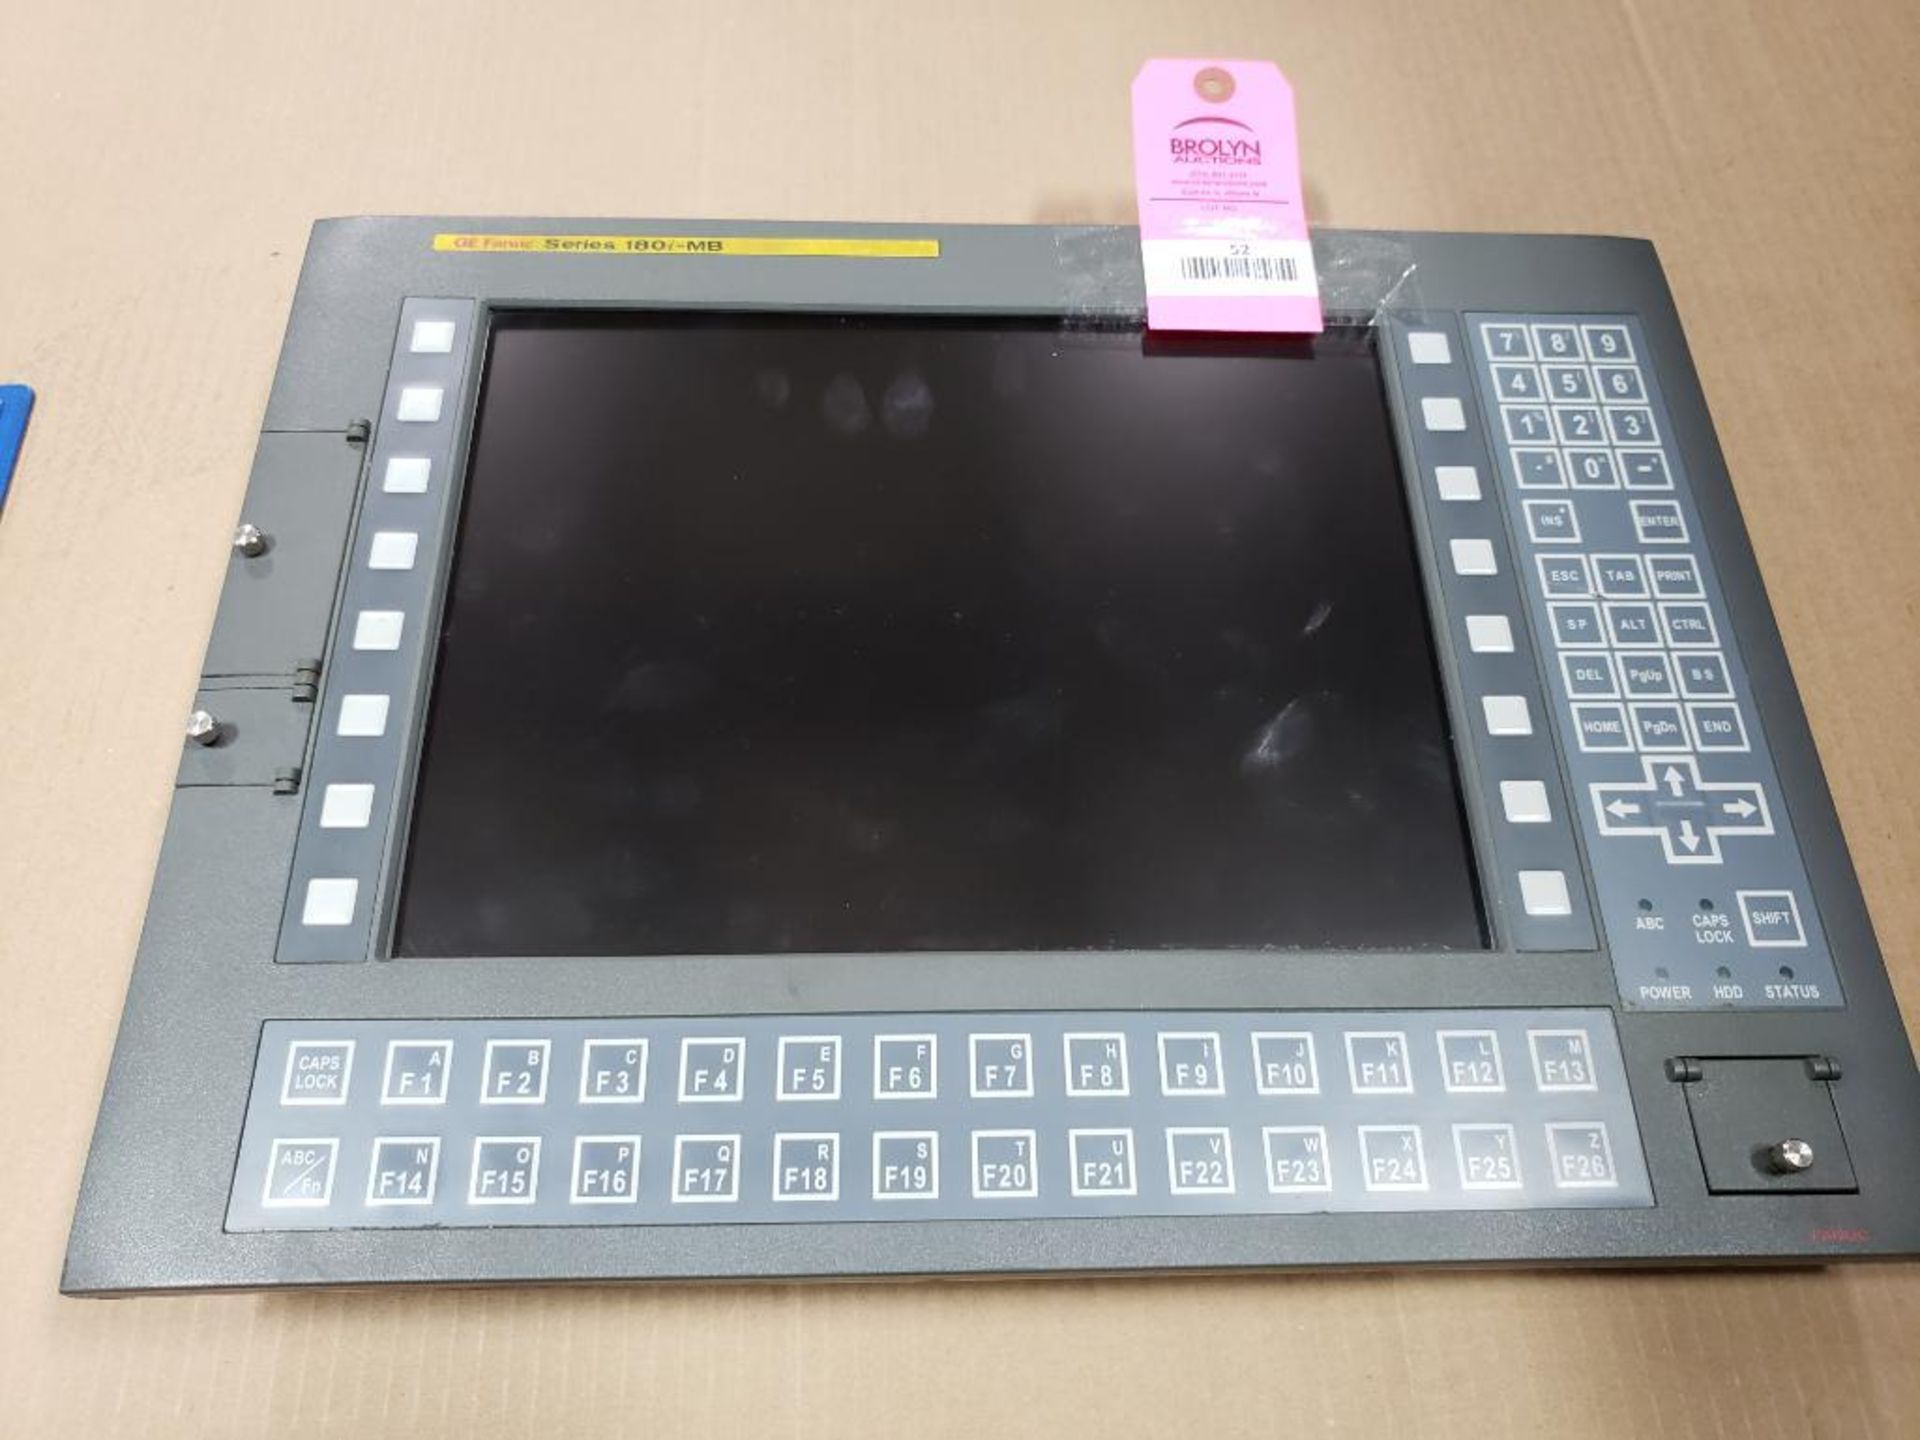 GE Fanuc Series 180i-MB base unit. A20B-8002-0500 display card.